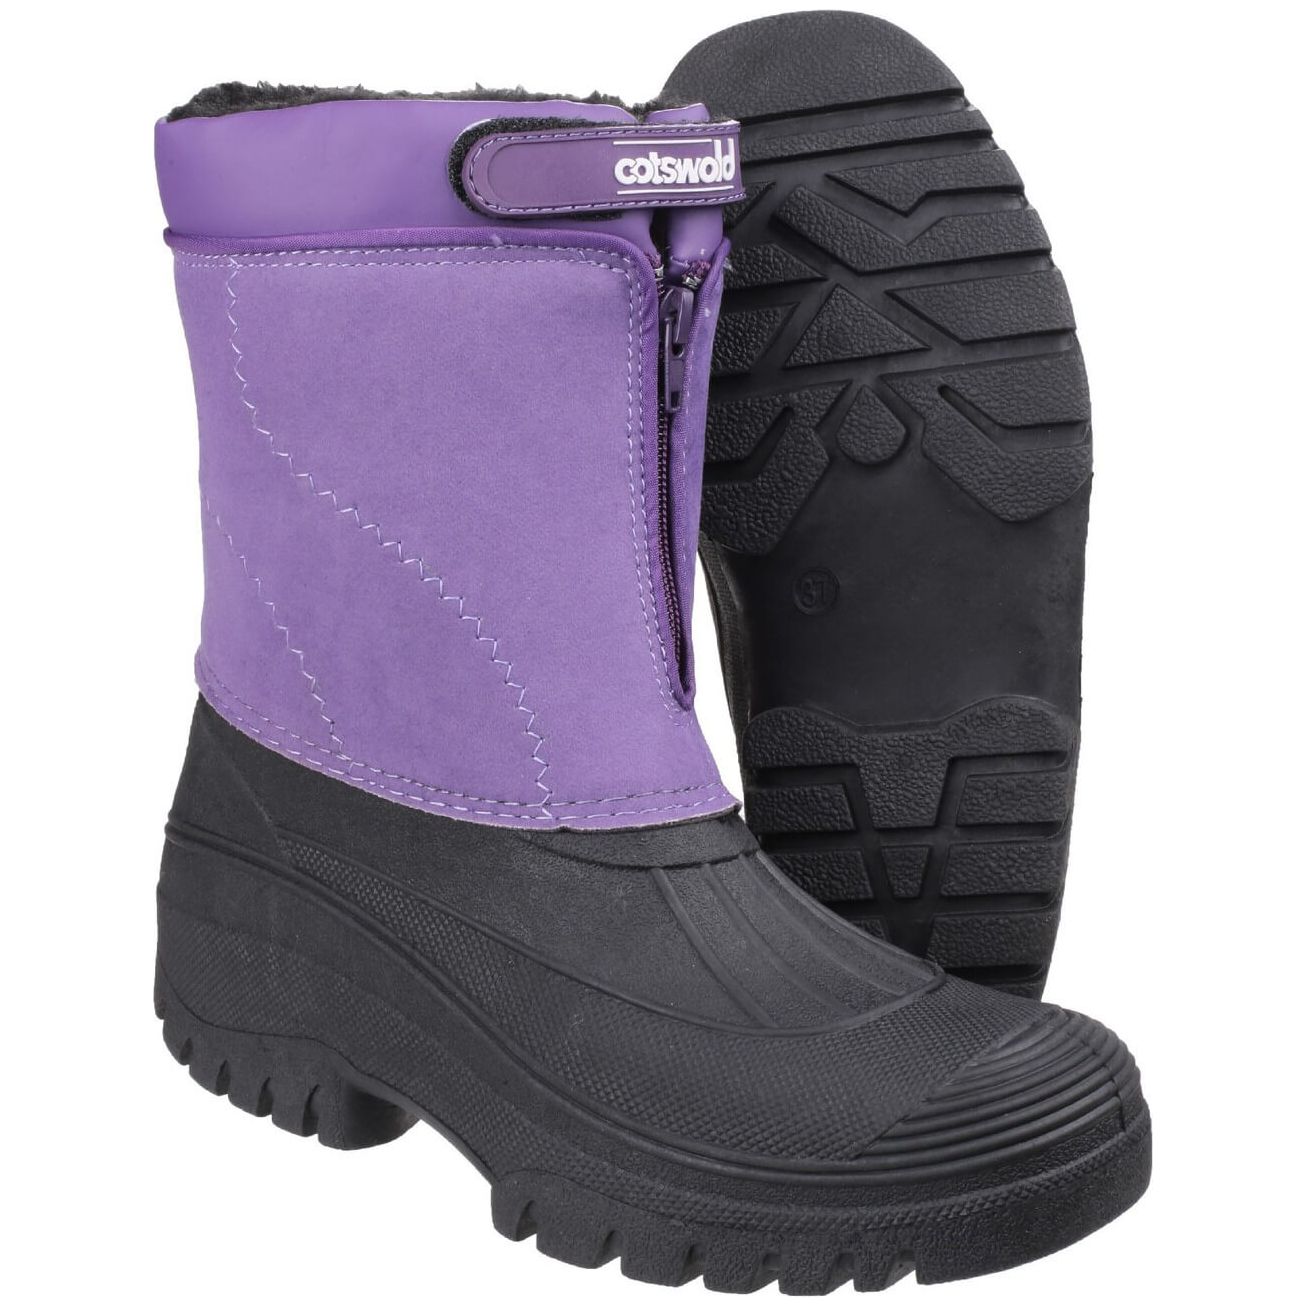 Cotswold Venture Waterproof Winter Boots-Purple-3